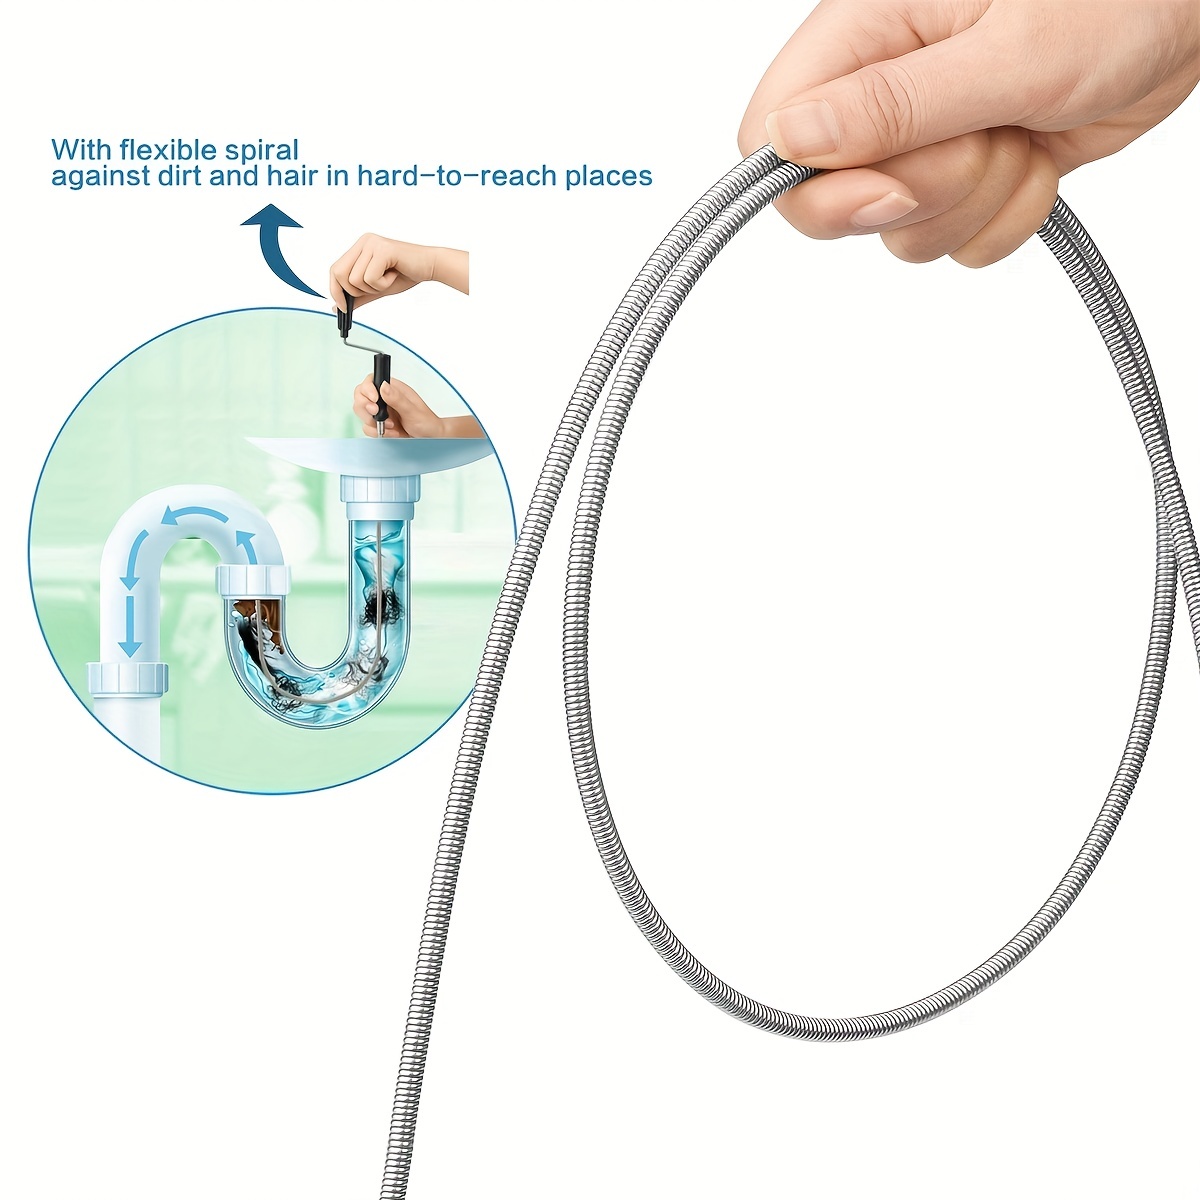 Flexible Spiral Drain Cleaning Set, Spiral Drain Cleaner, Snake